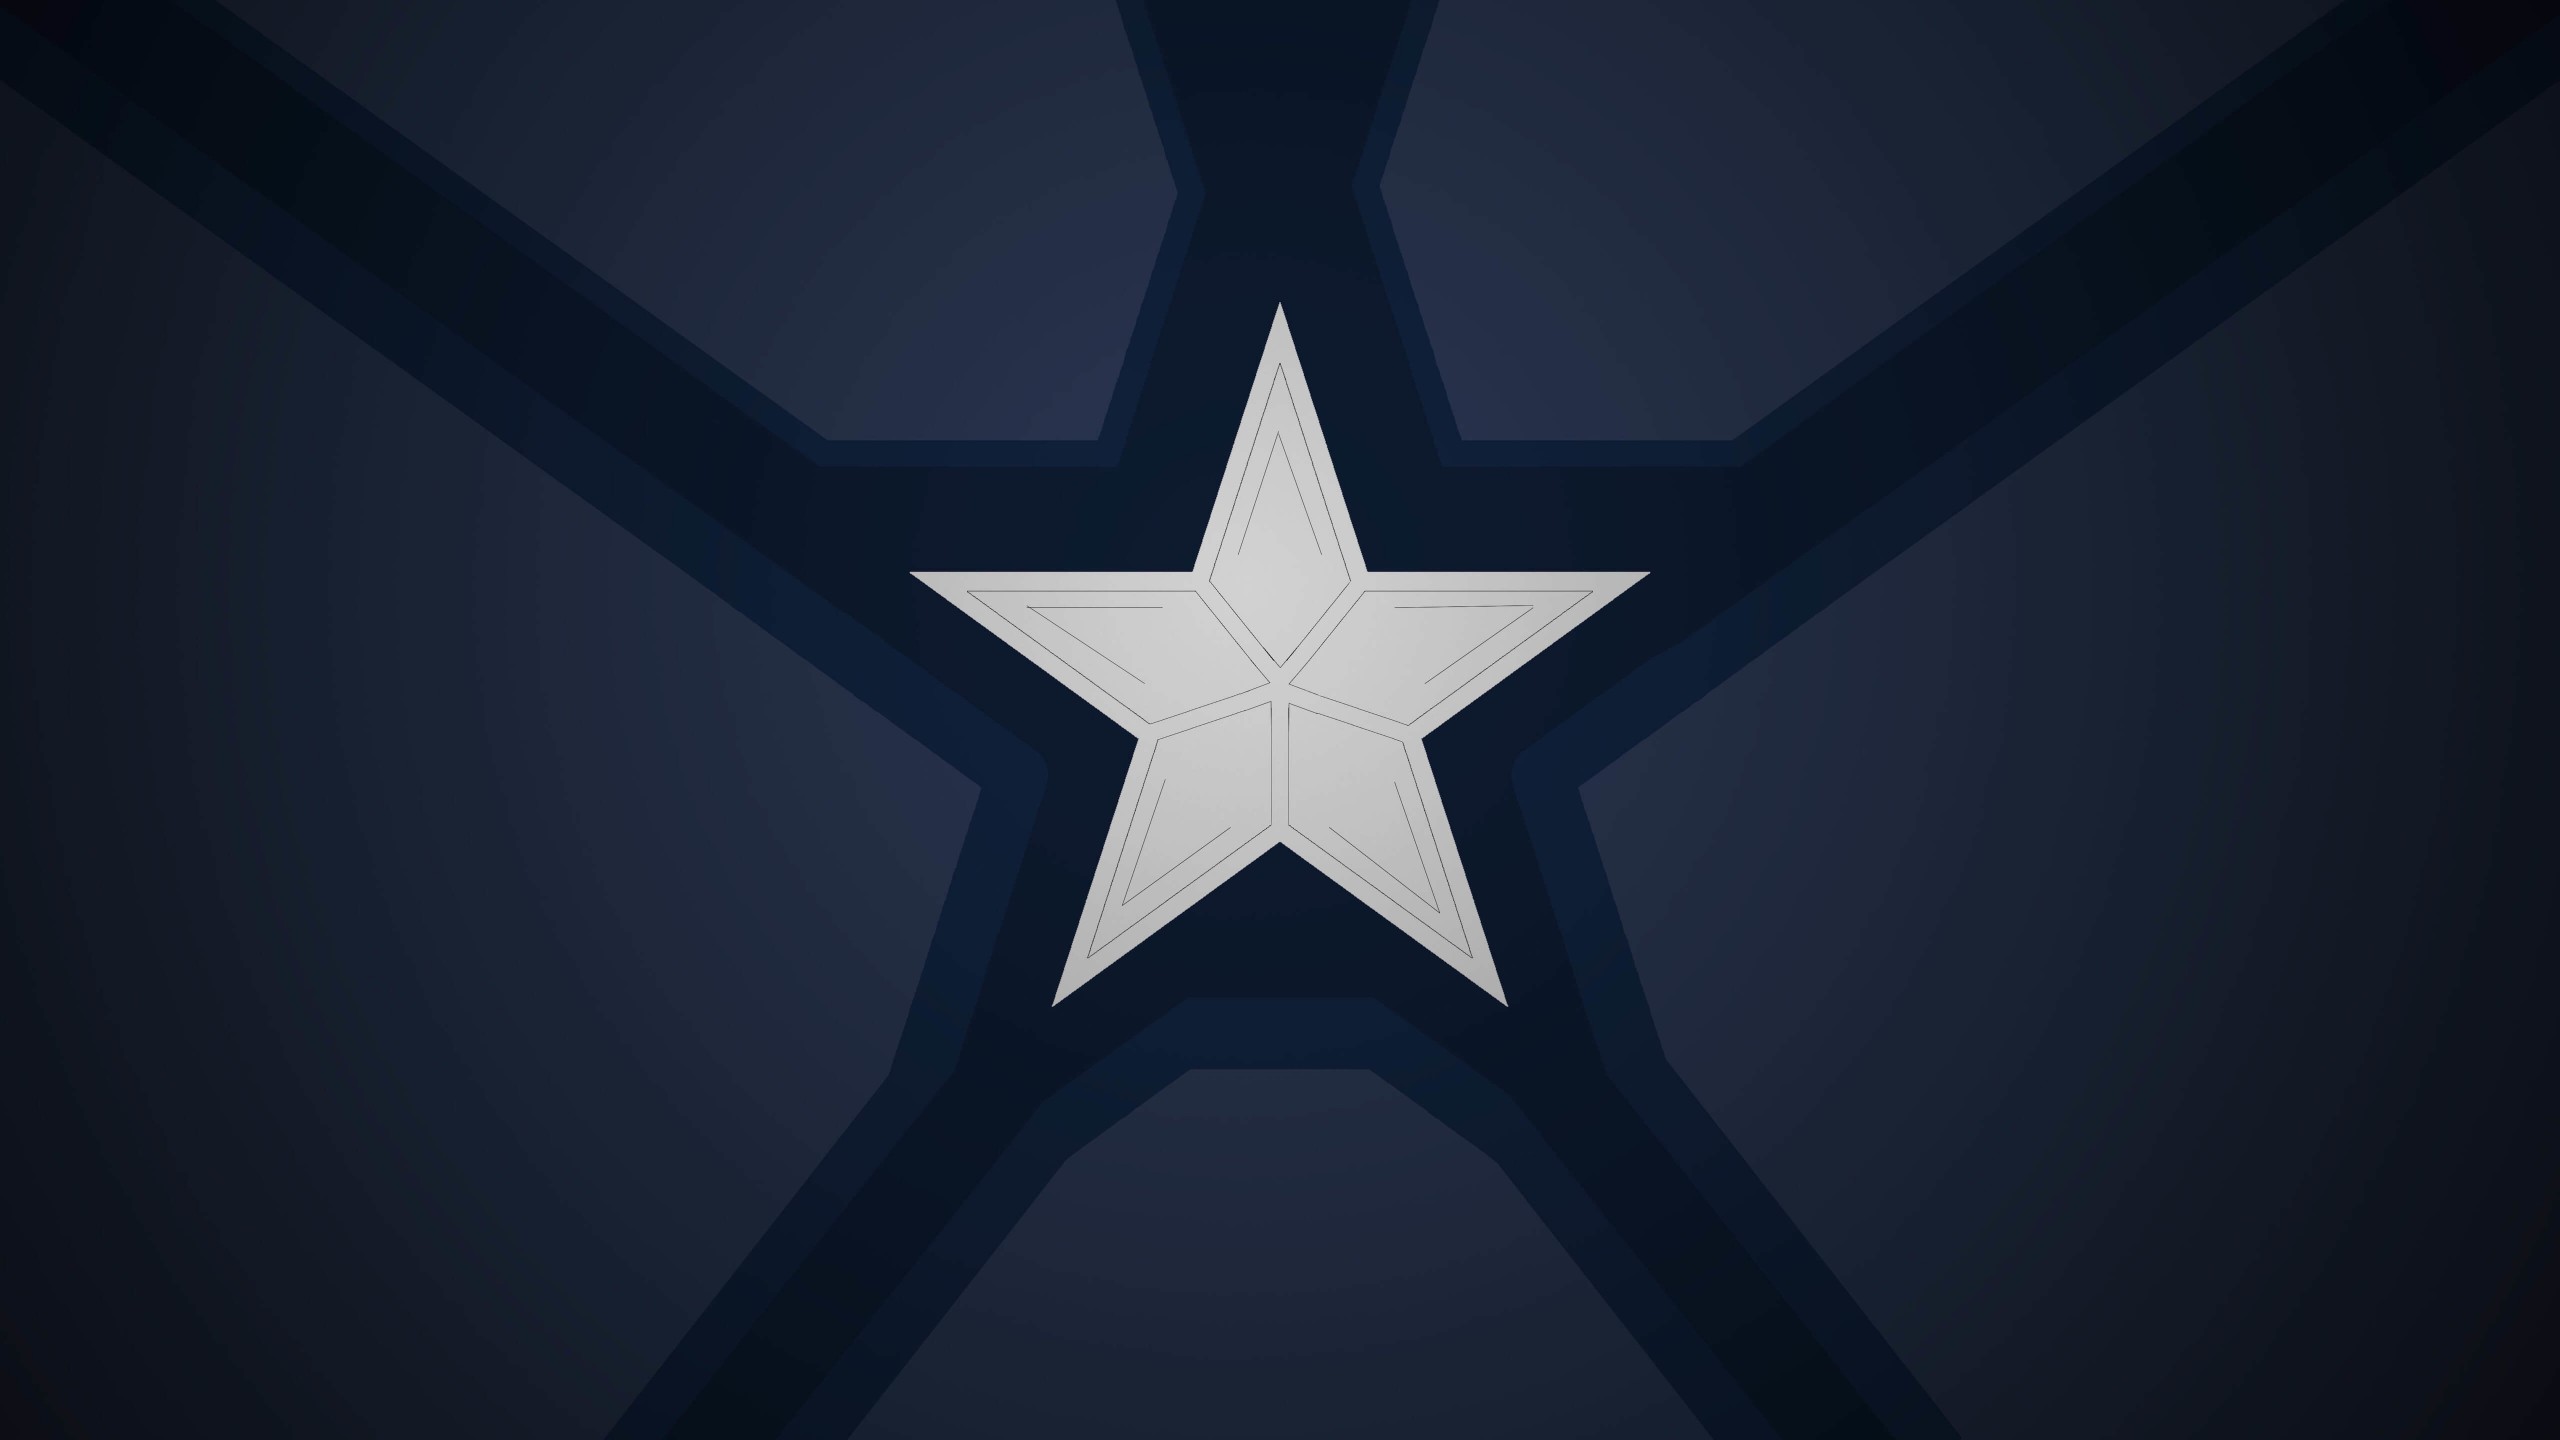 Captain America Emblem Wallpaper for Desktop 2560x1440